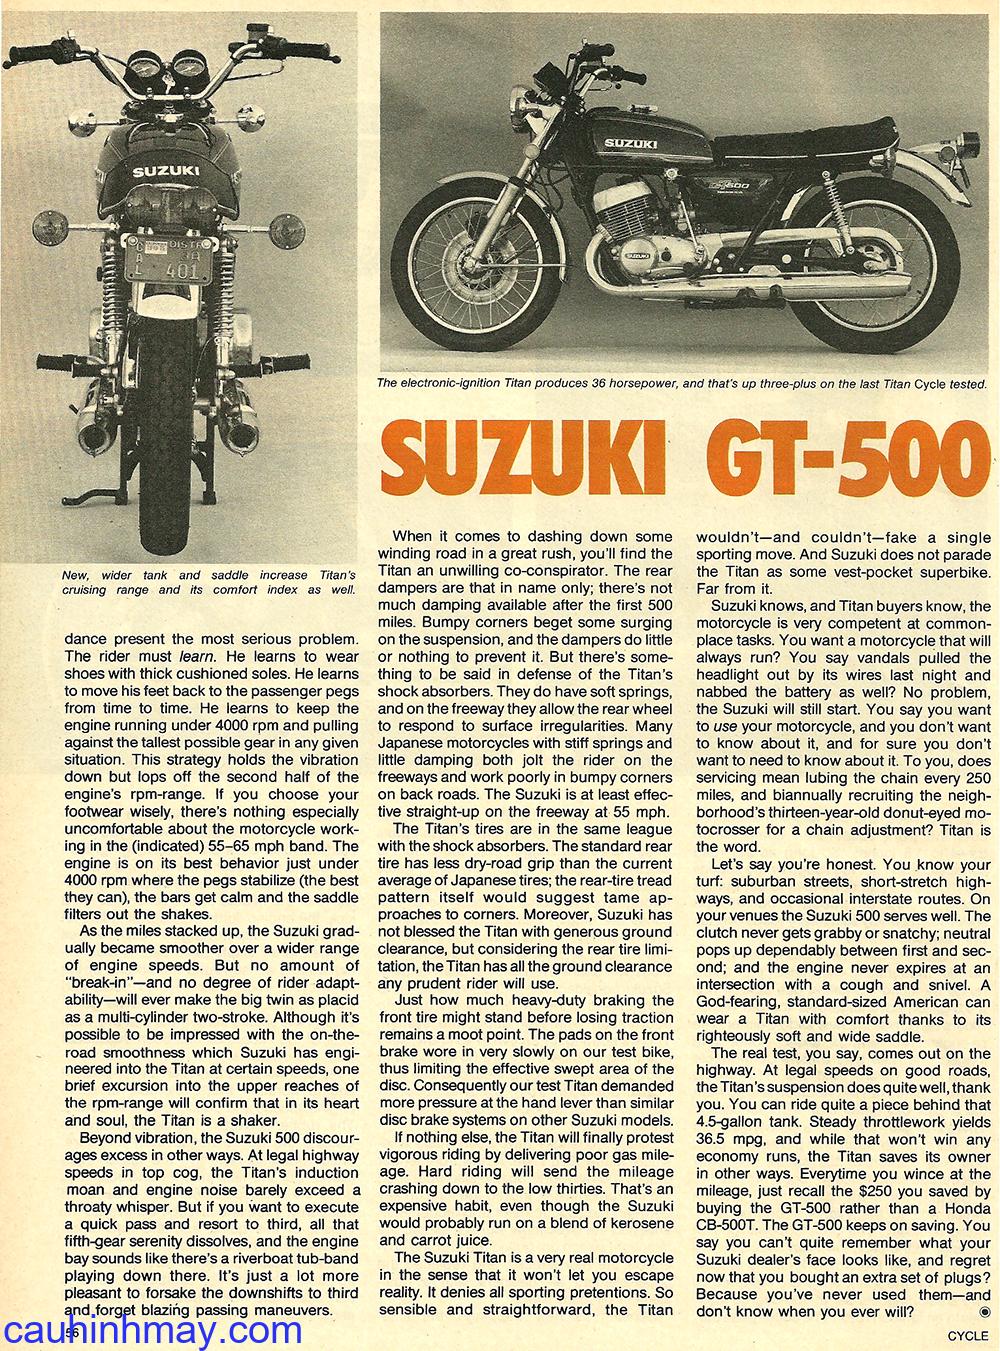 SUZUKI GT 500 - cauhinhmay.com